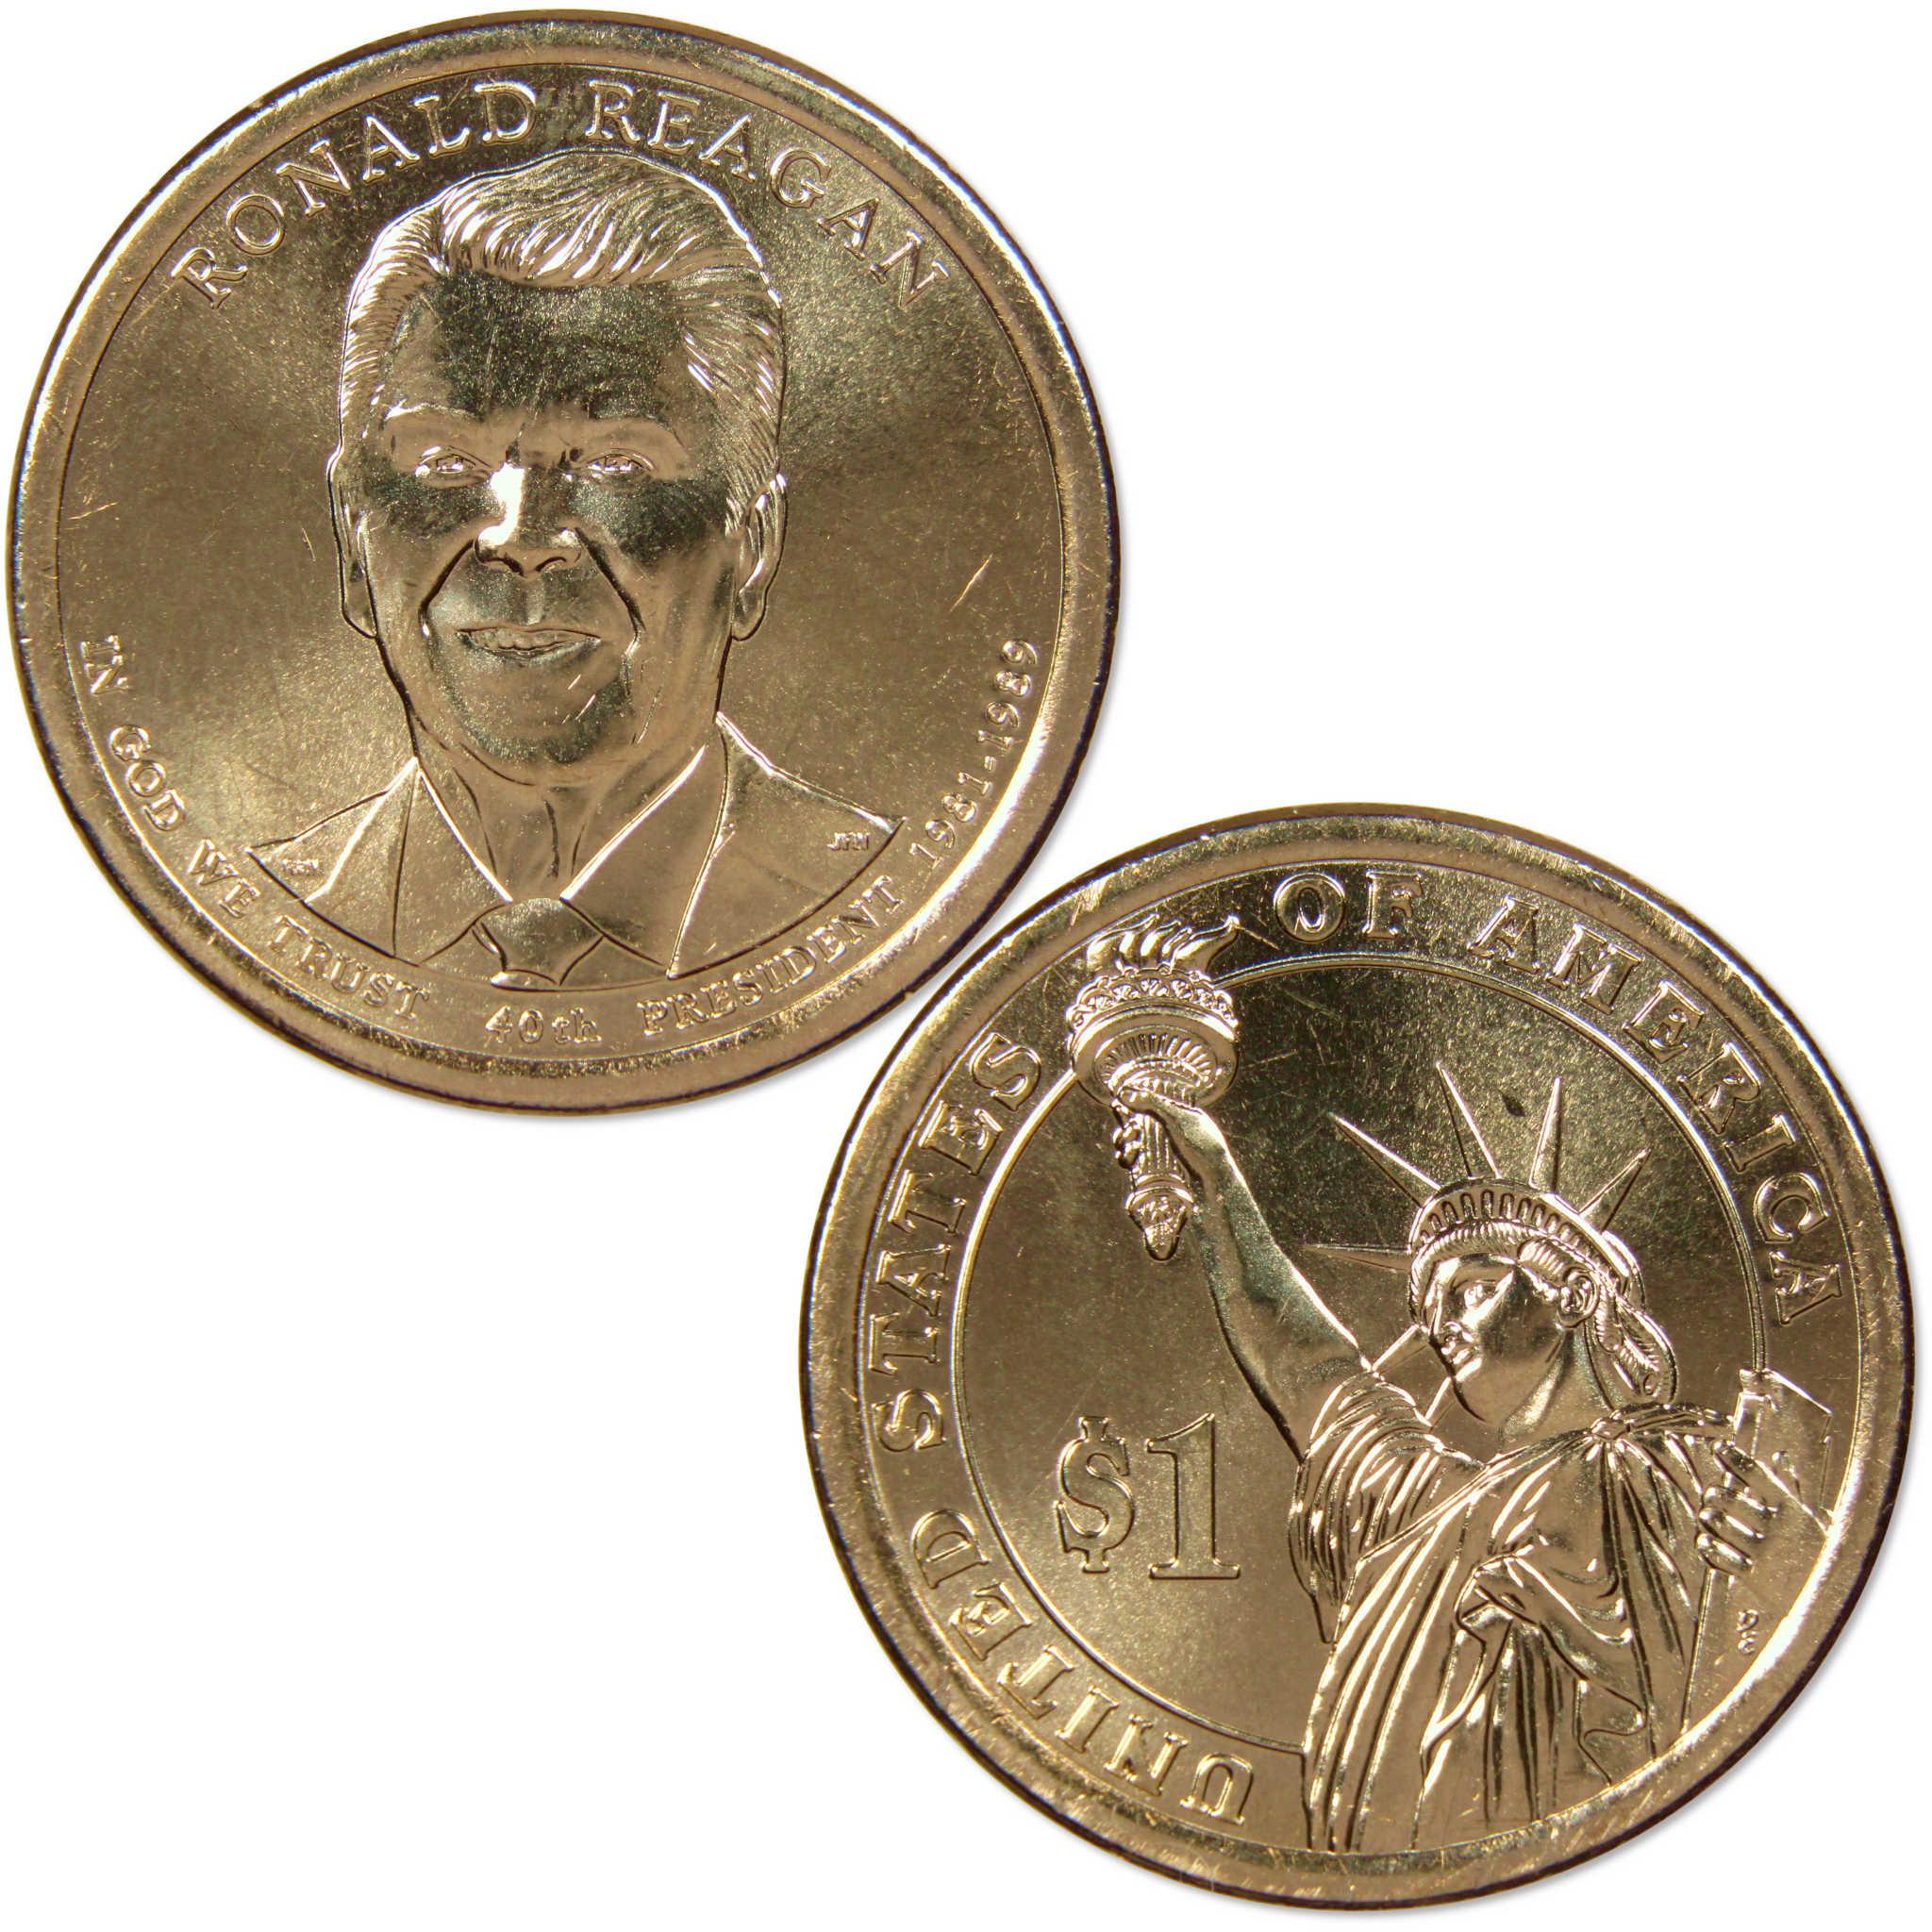 2016 P&D Ronald Reagan Presidential Dollar 2 Piece Set BU Uncirculated $1 Coins